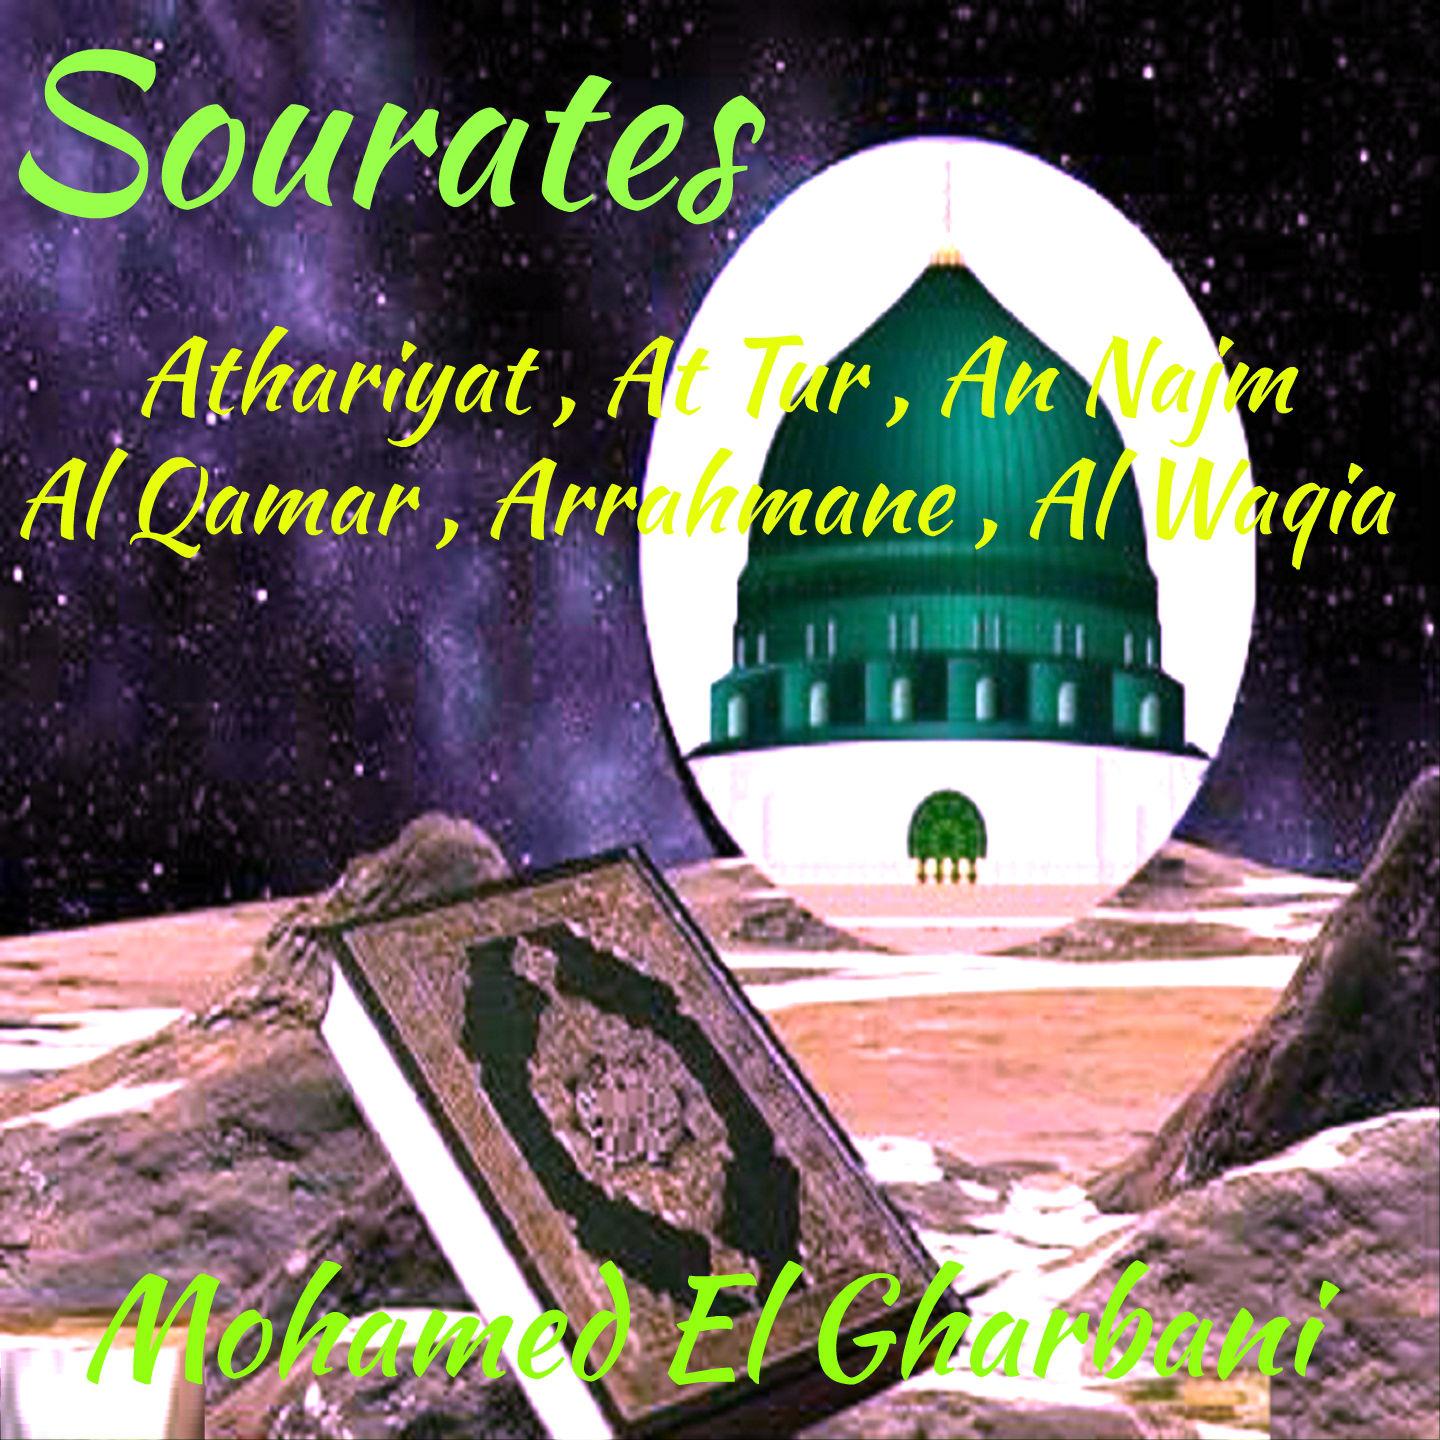 Постер альбома Sourates Athariyat , At Tur , An Najm , Al Qamar , Arrahmane , Al Waqia